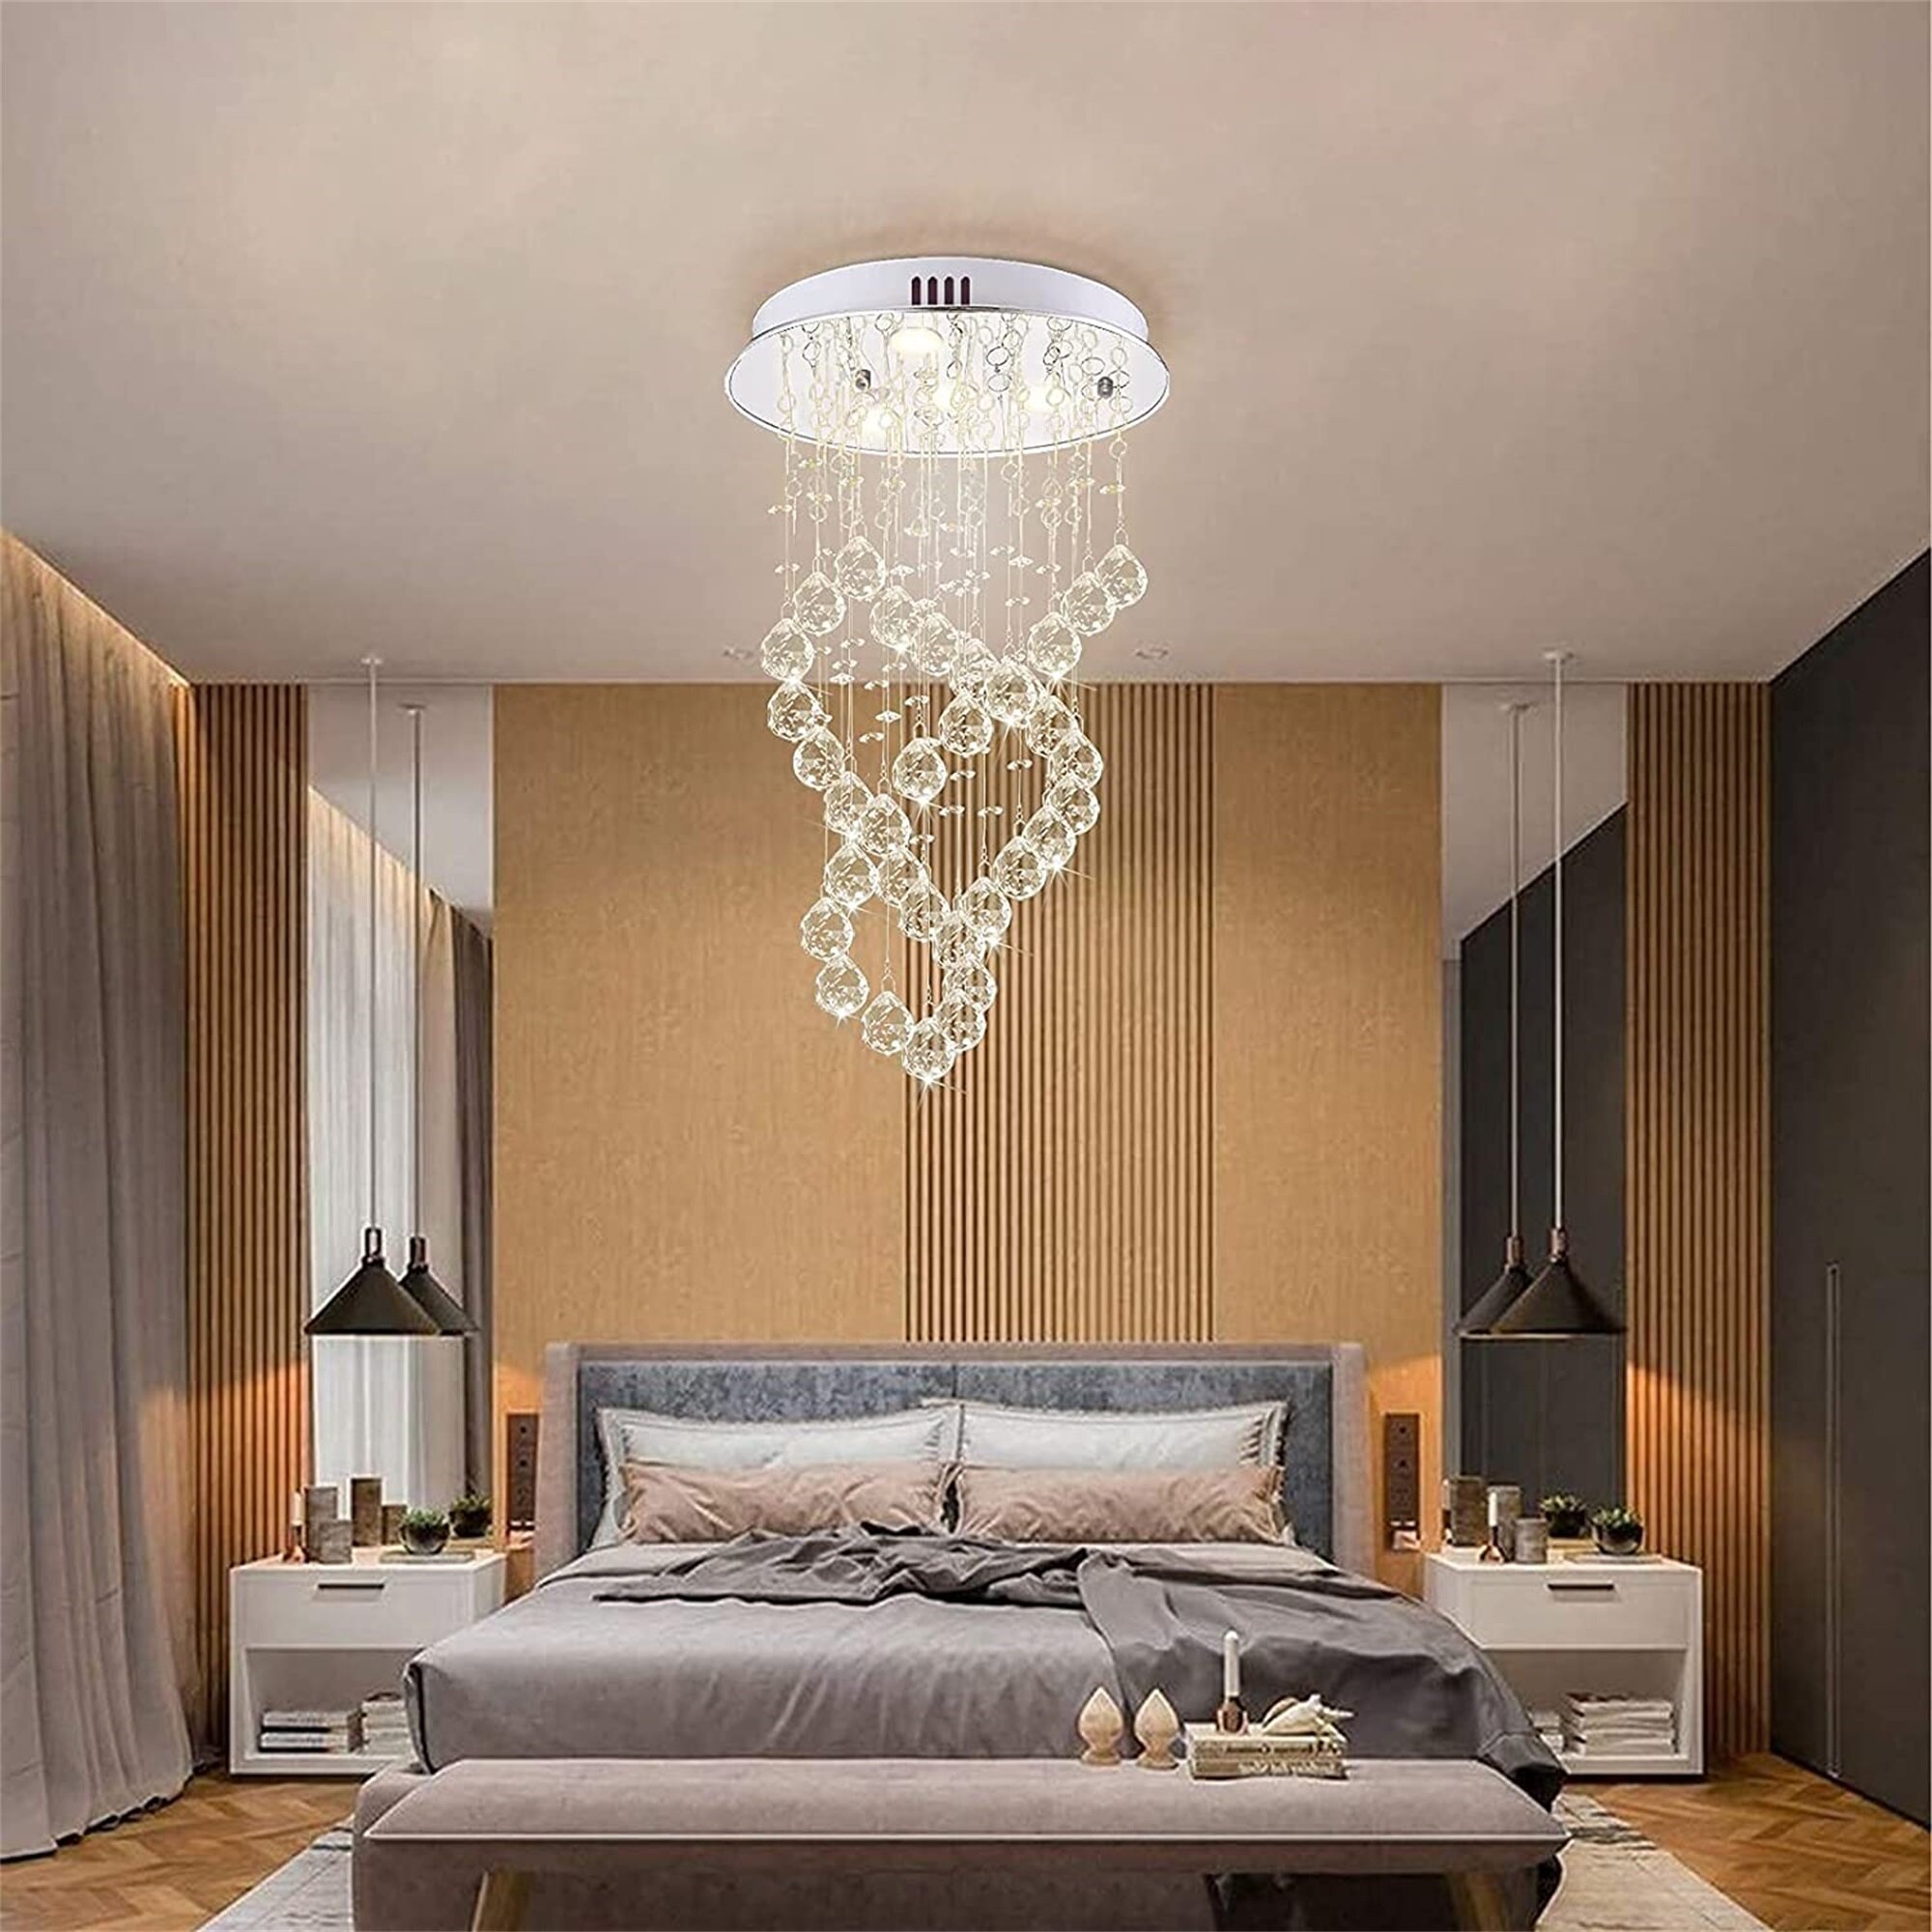 New Modern Crystal Light pendant Lamp Bedroom ceiling Lighting Chandeliers LED 